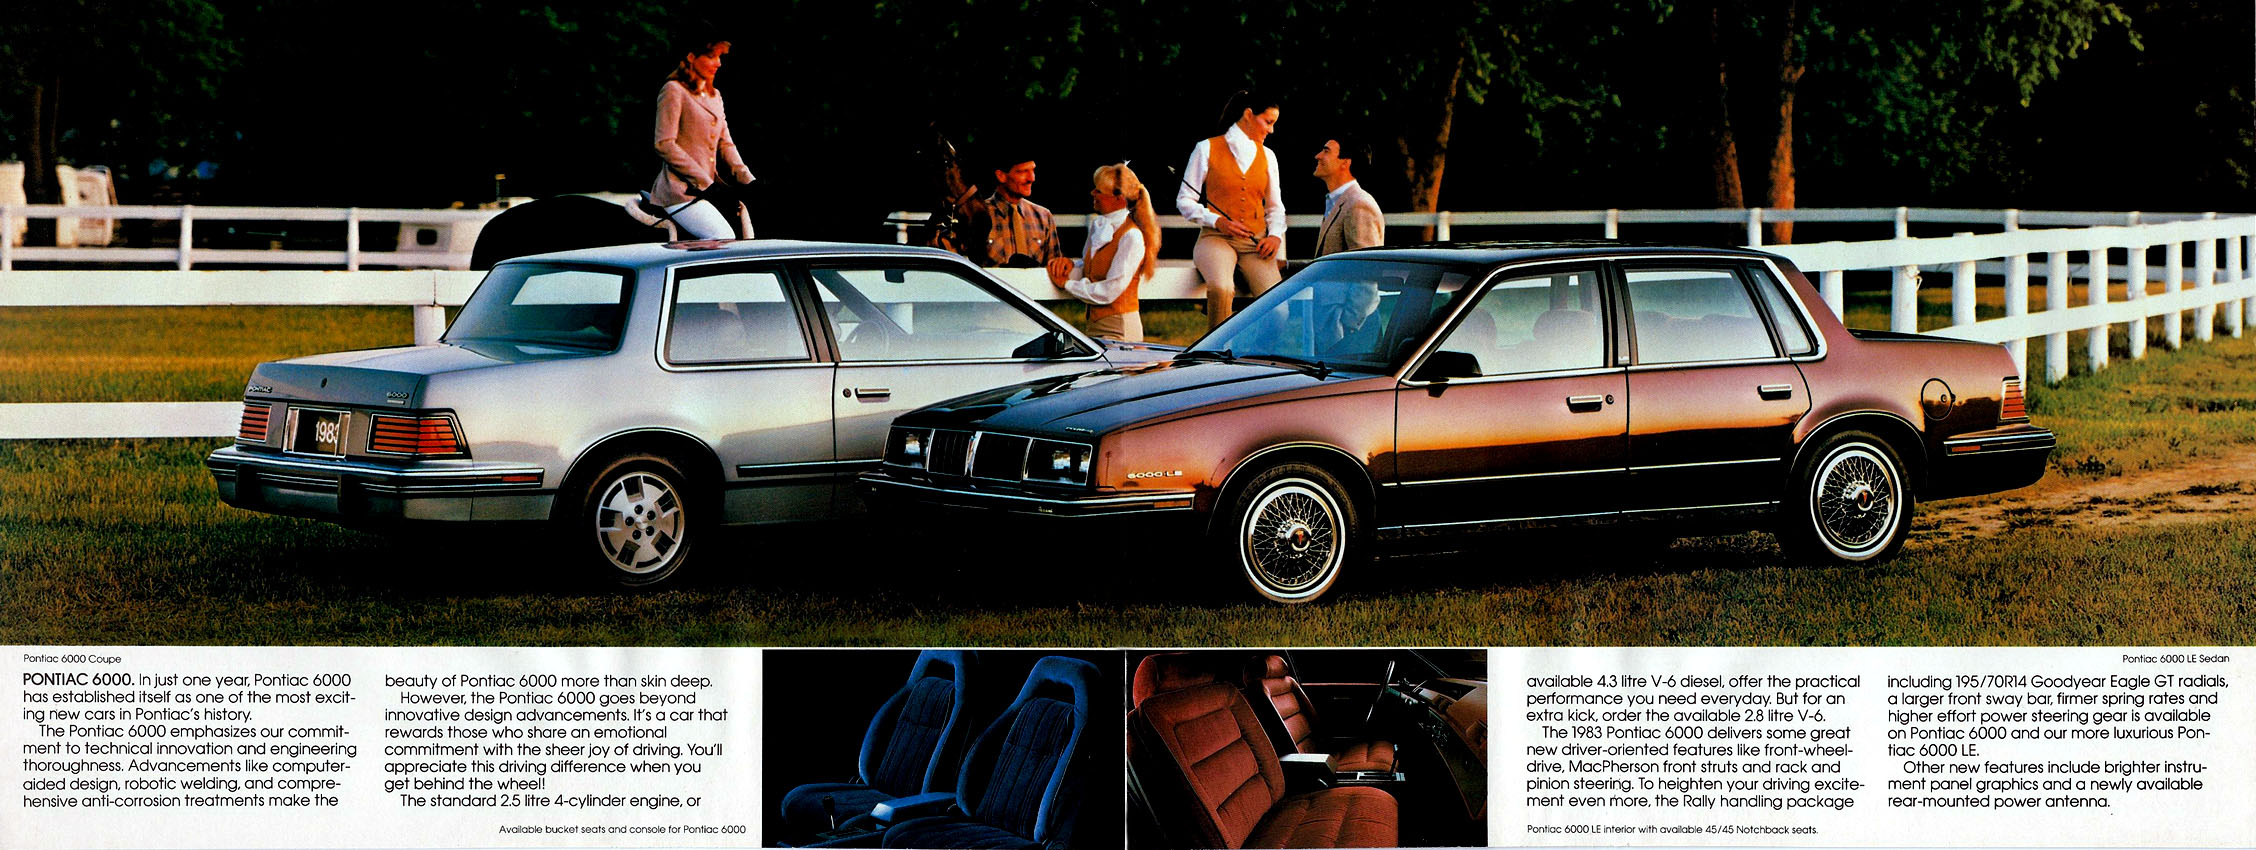 1983 Pontiac 6000 (Cdn)-04-05.